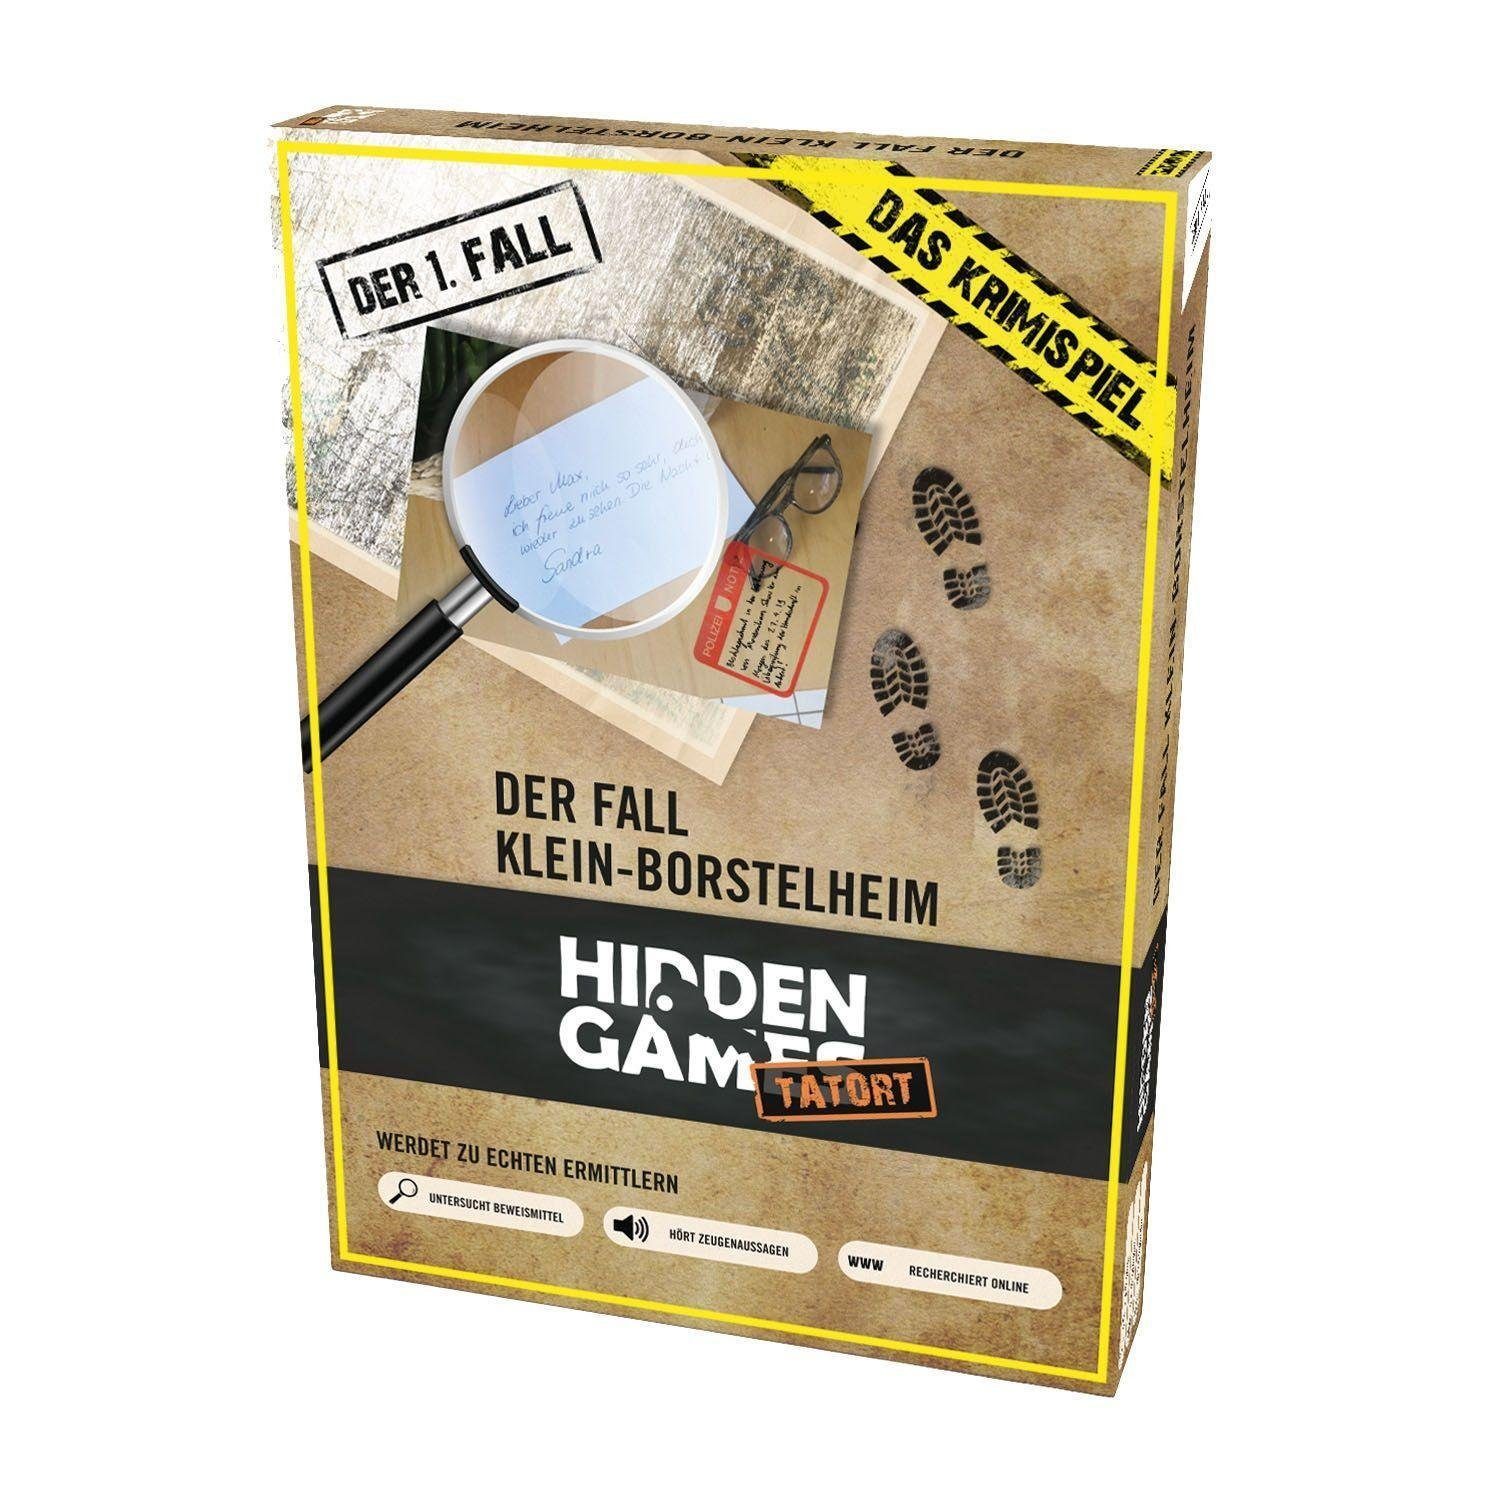 Pegasus Spiele Spiel, Hidden Games Tatort: Der Fall Klein-Borstelheim 1.Fall